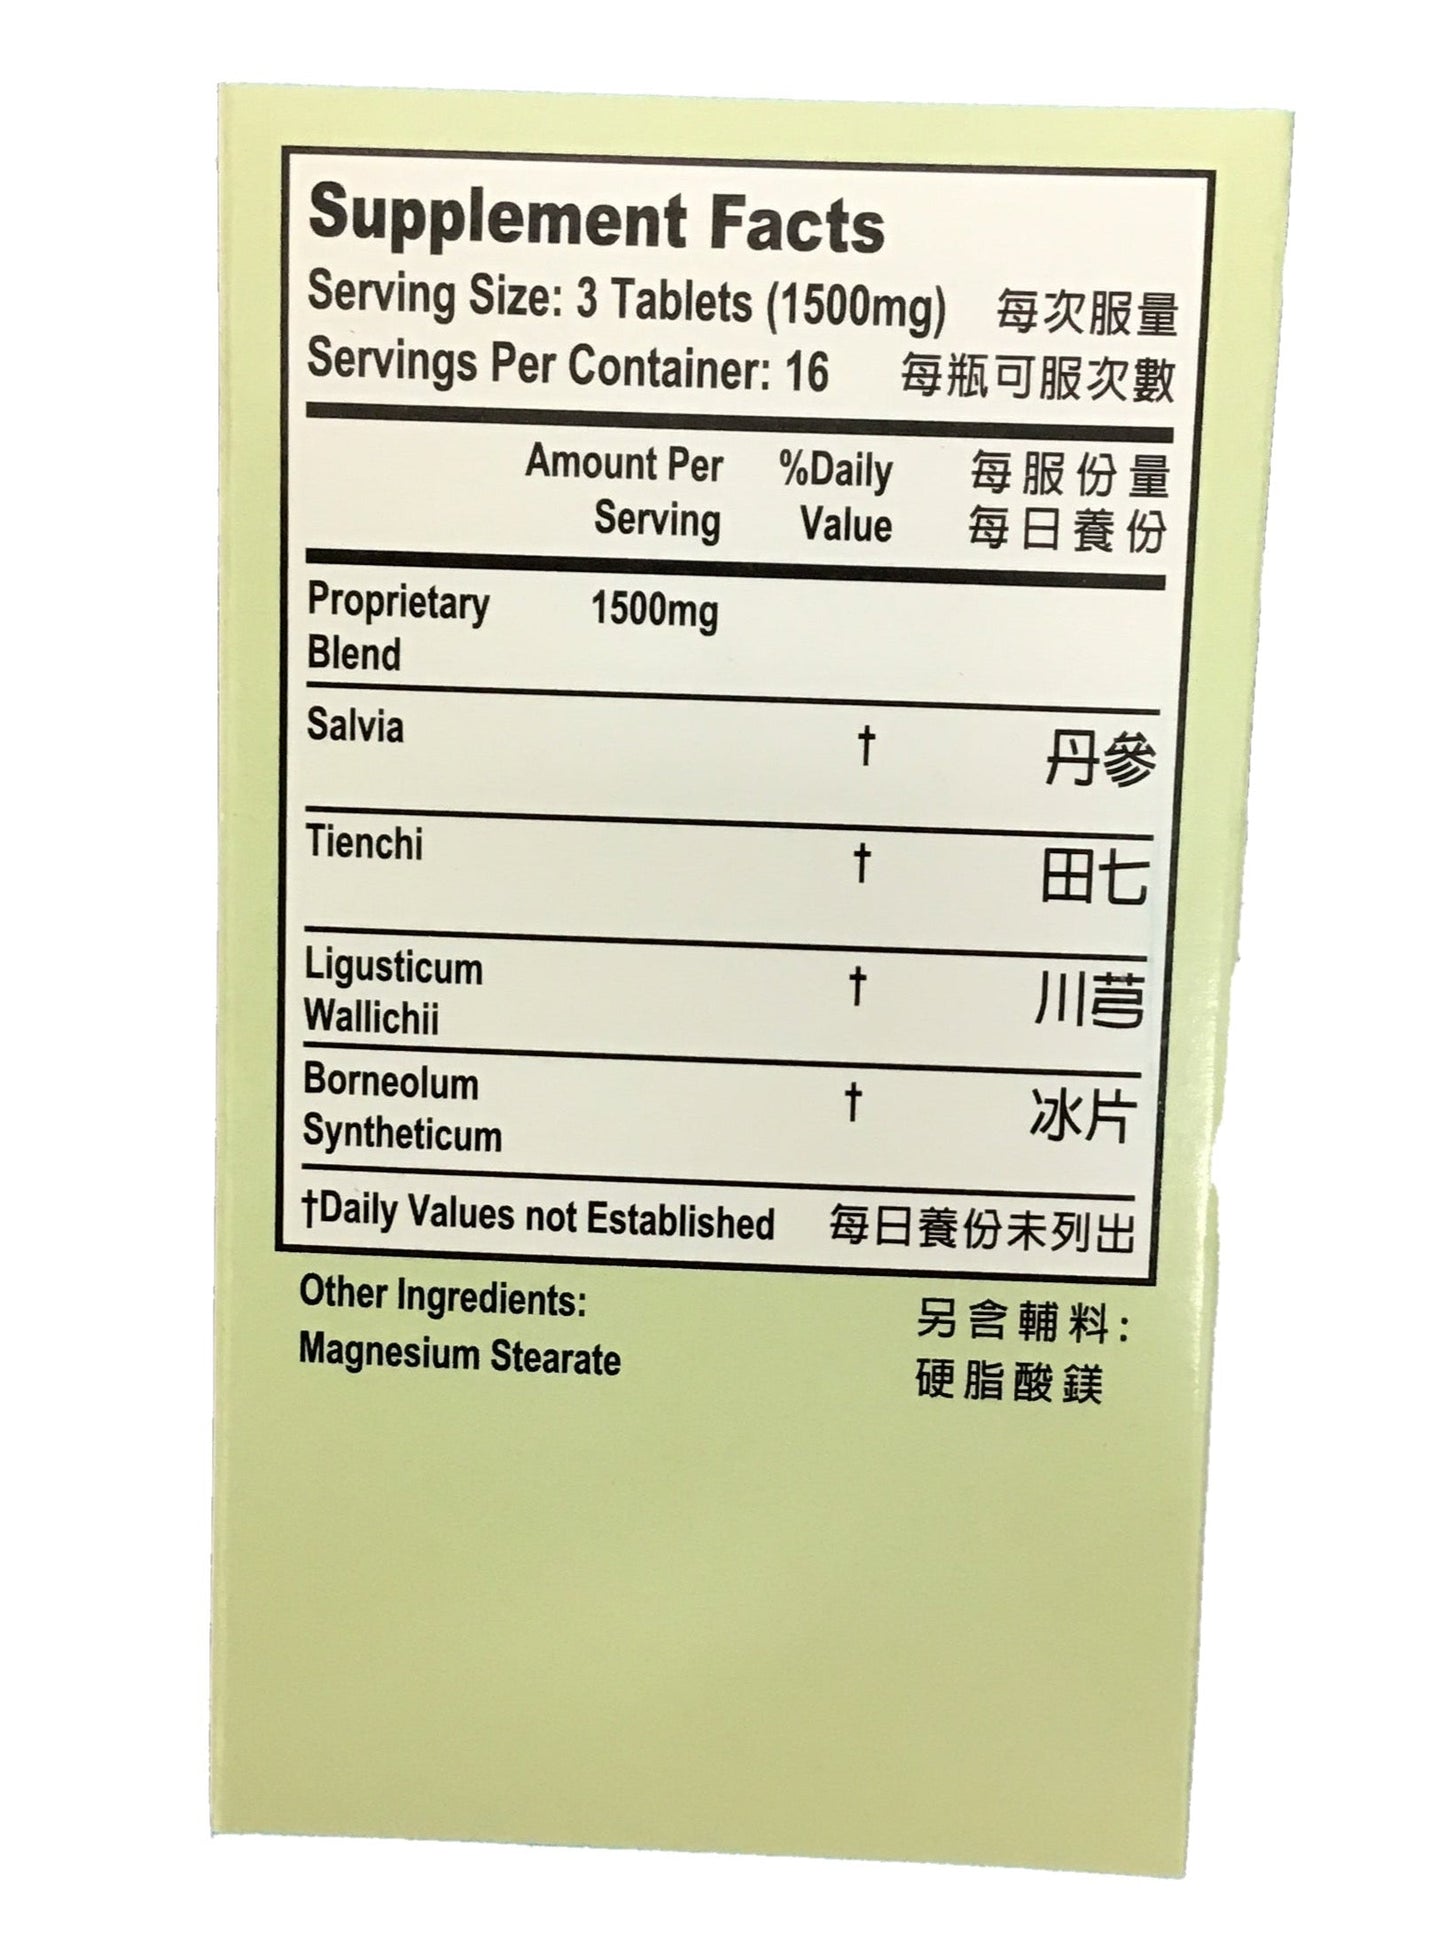 LW Salvia Root Combo Extract/Dan Shen Pian (50 Pills) 老威牌 複方丹參片 (50片装)